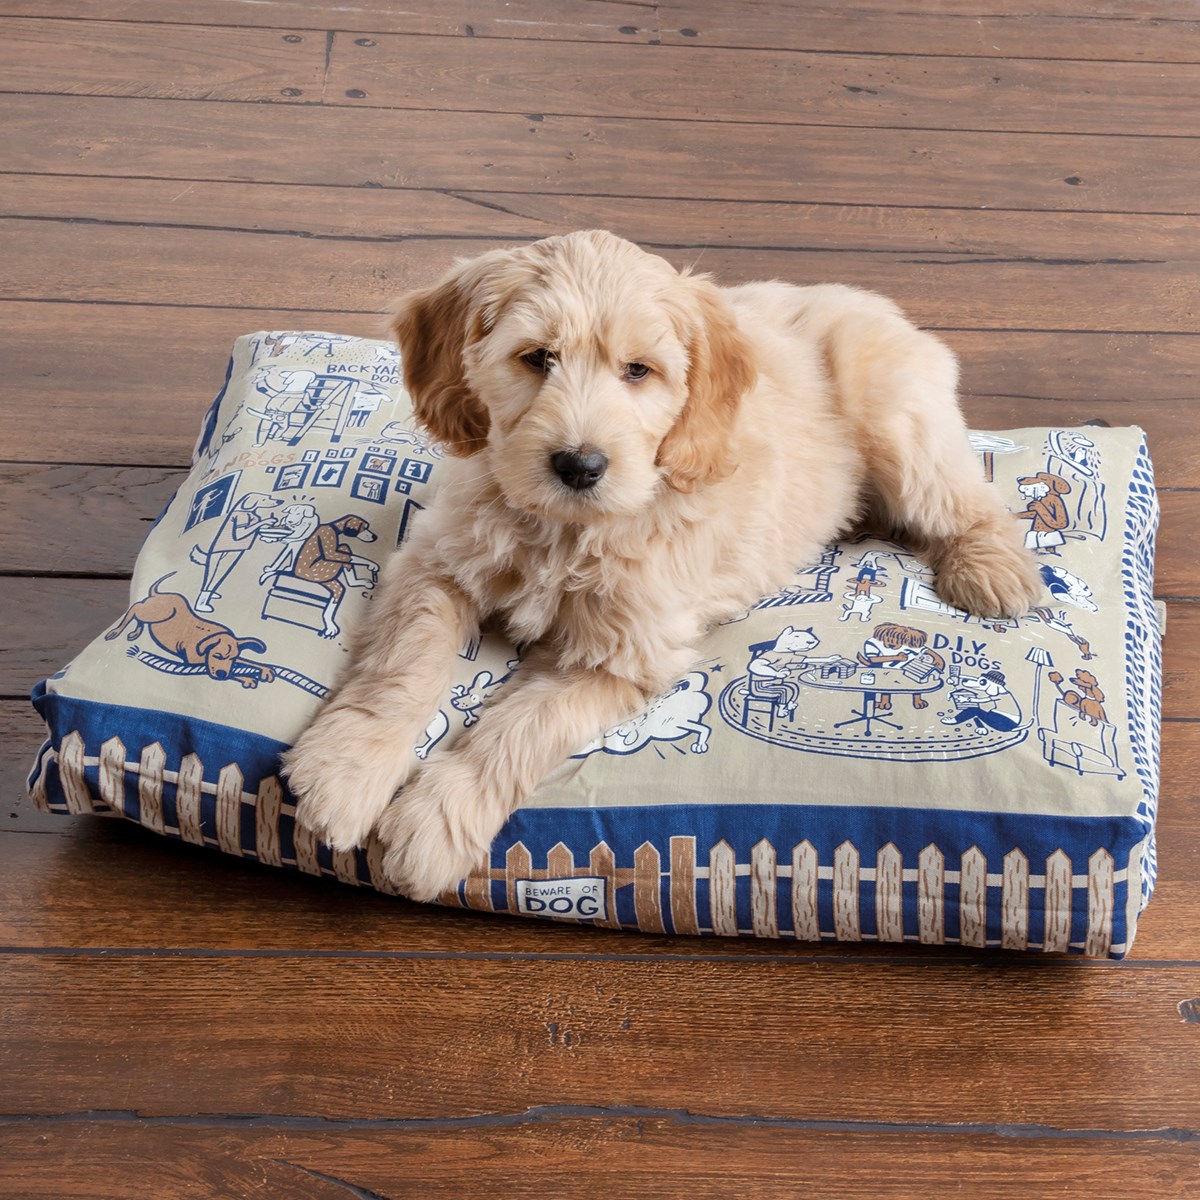 Dog Park Medium Pet Bed Cover - Cotton, Zipper